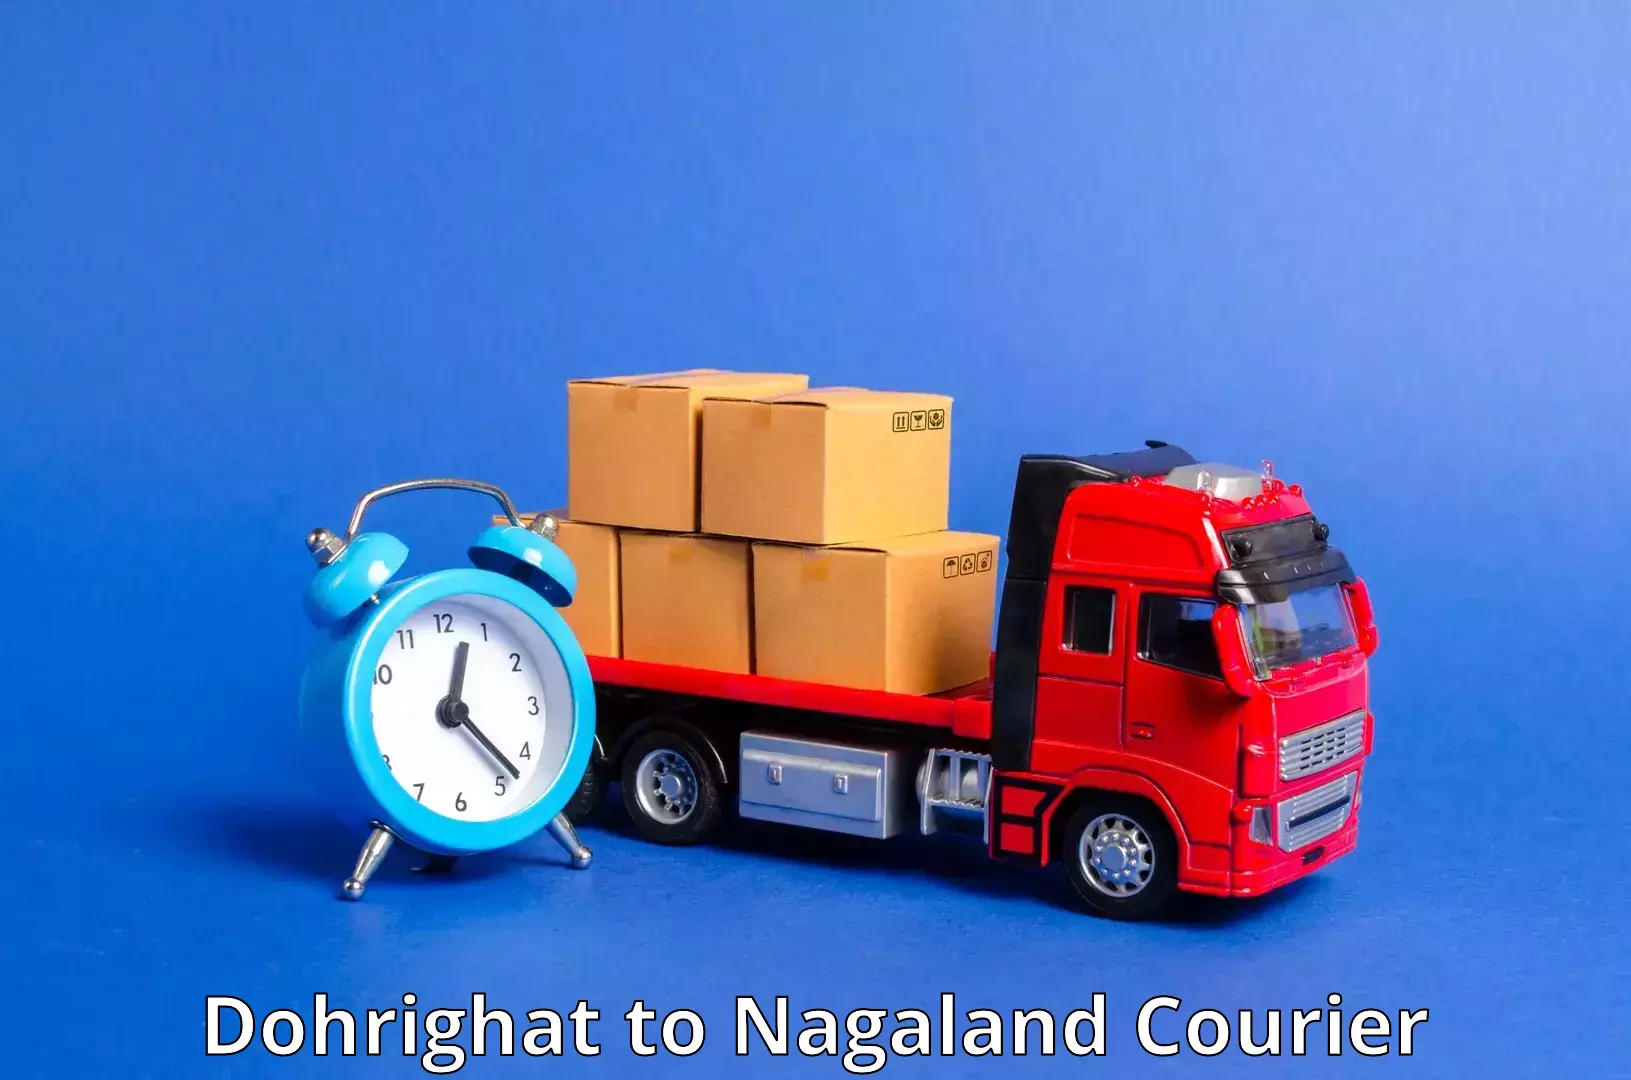 Logistics service provider Dohrighat to Dimapur